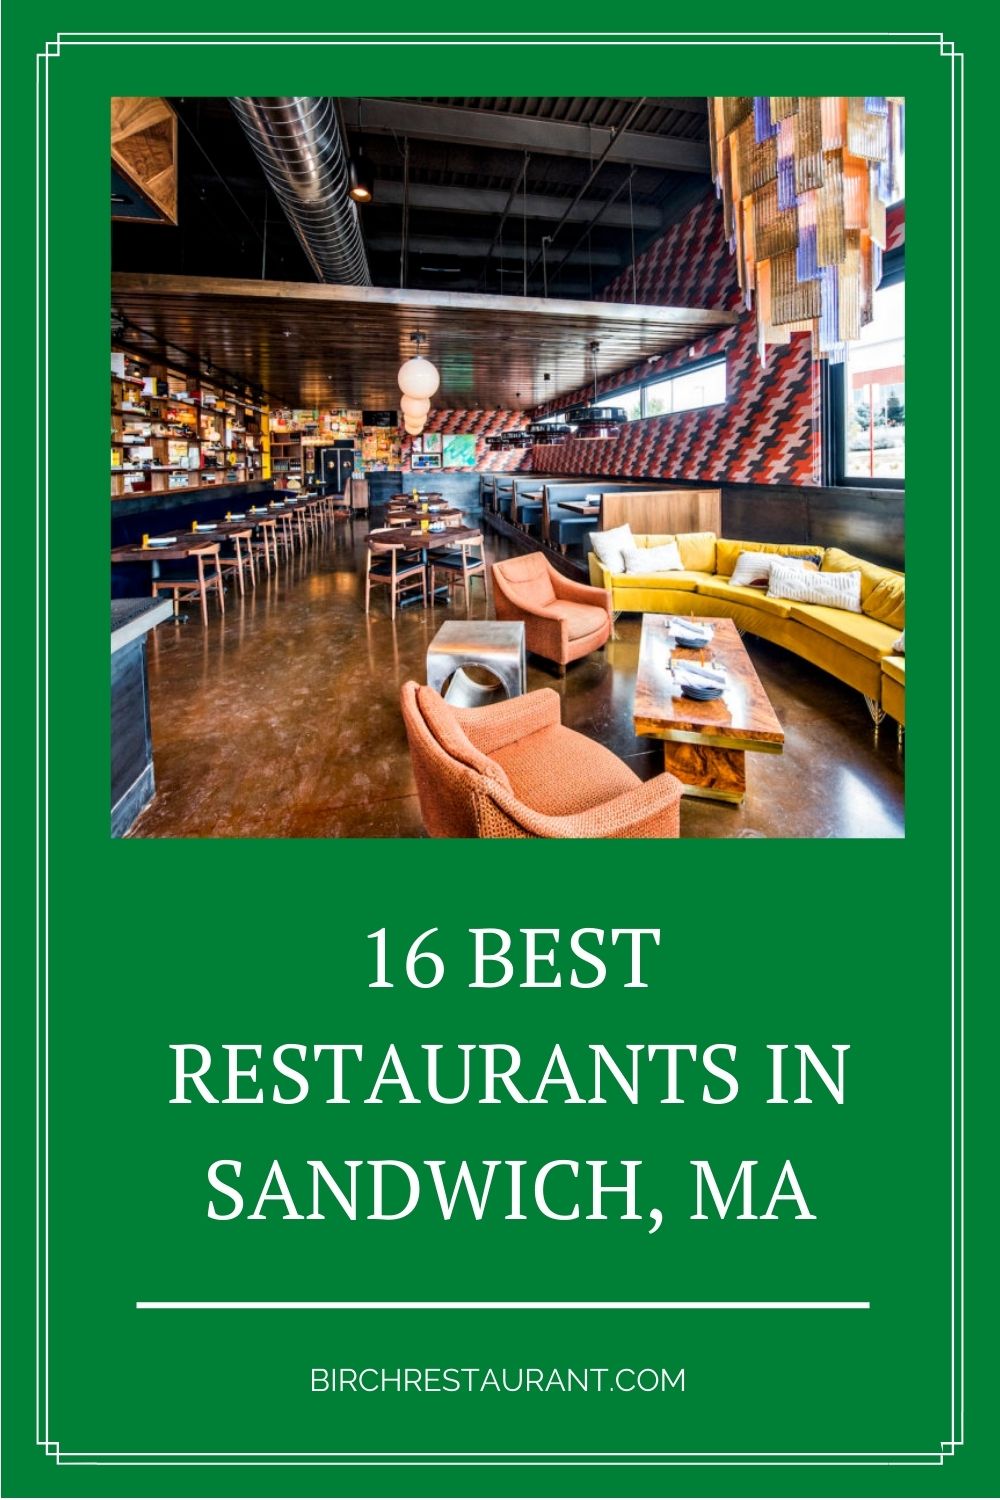 Best Restaurants in Sandwich